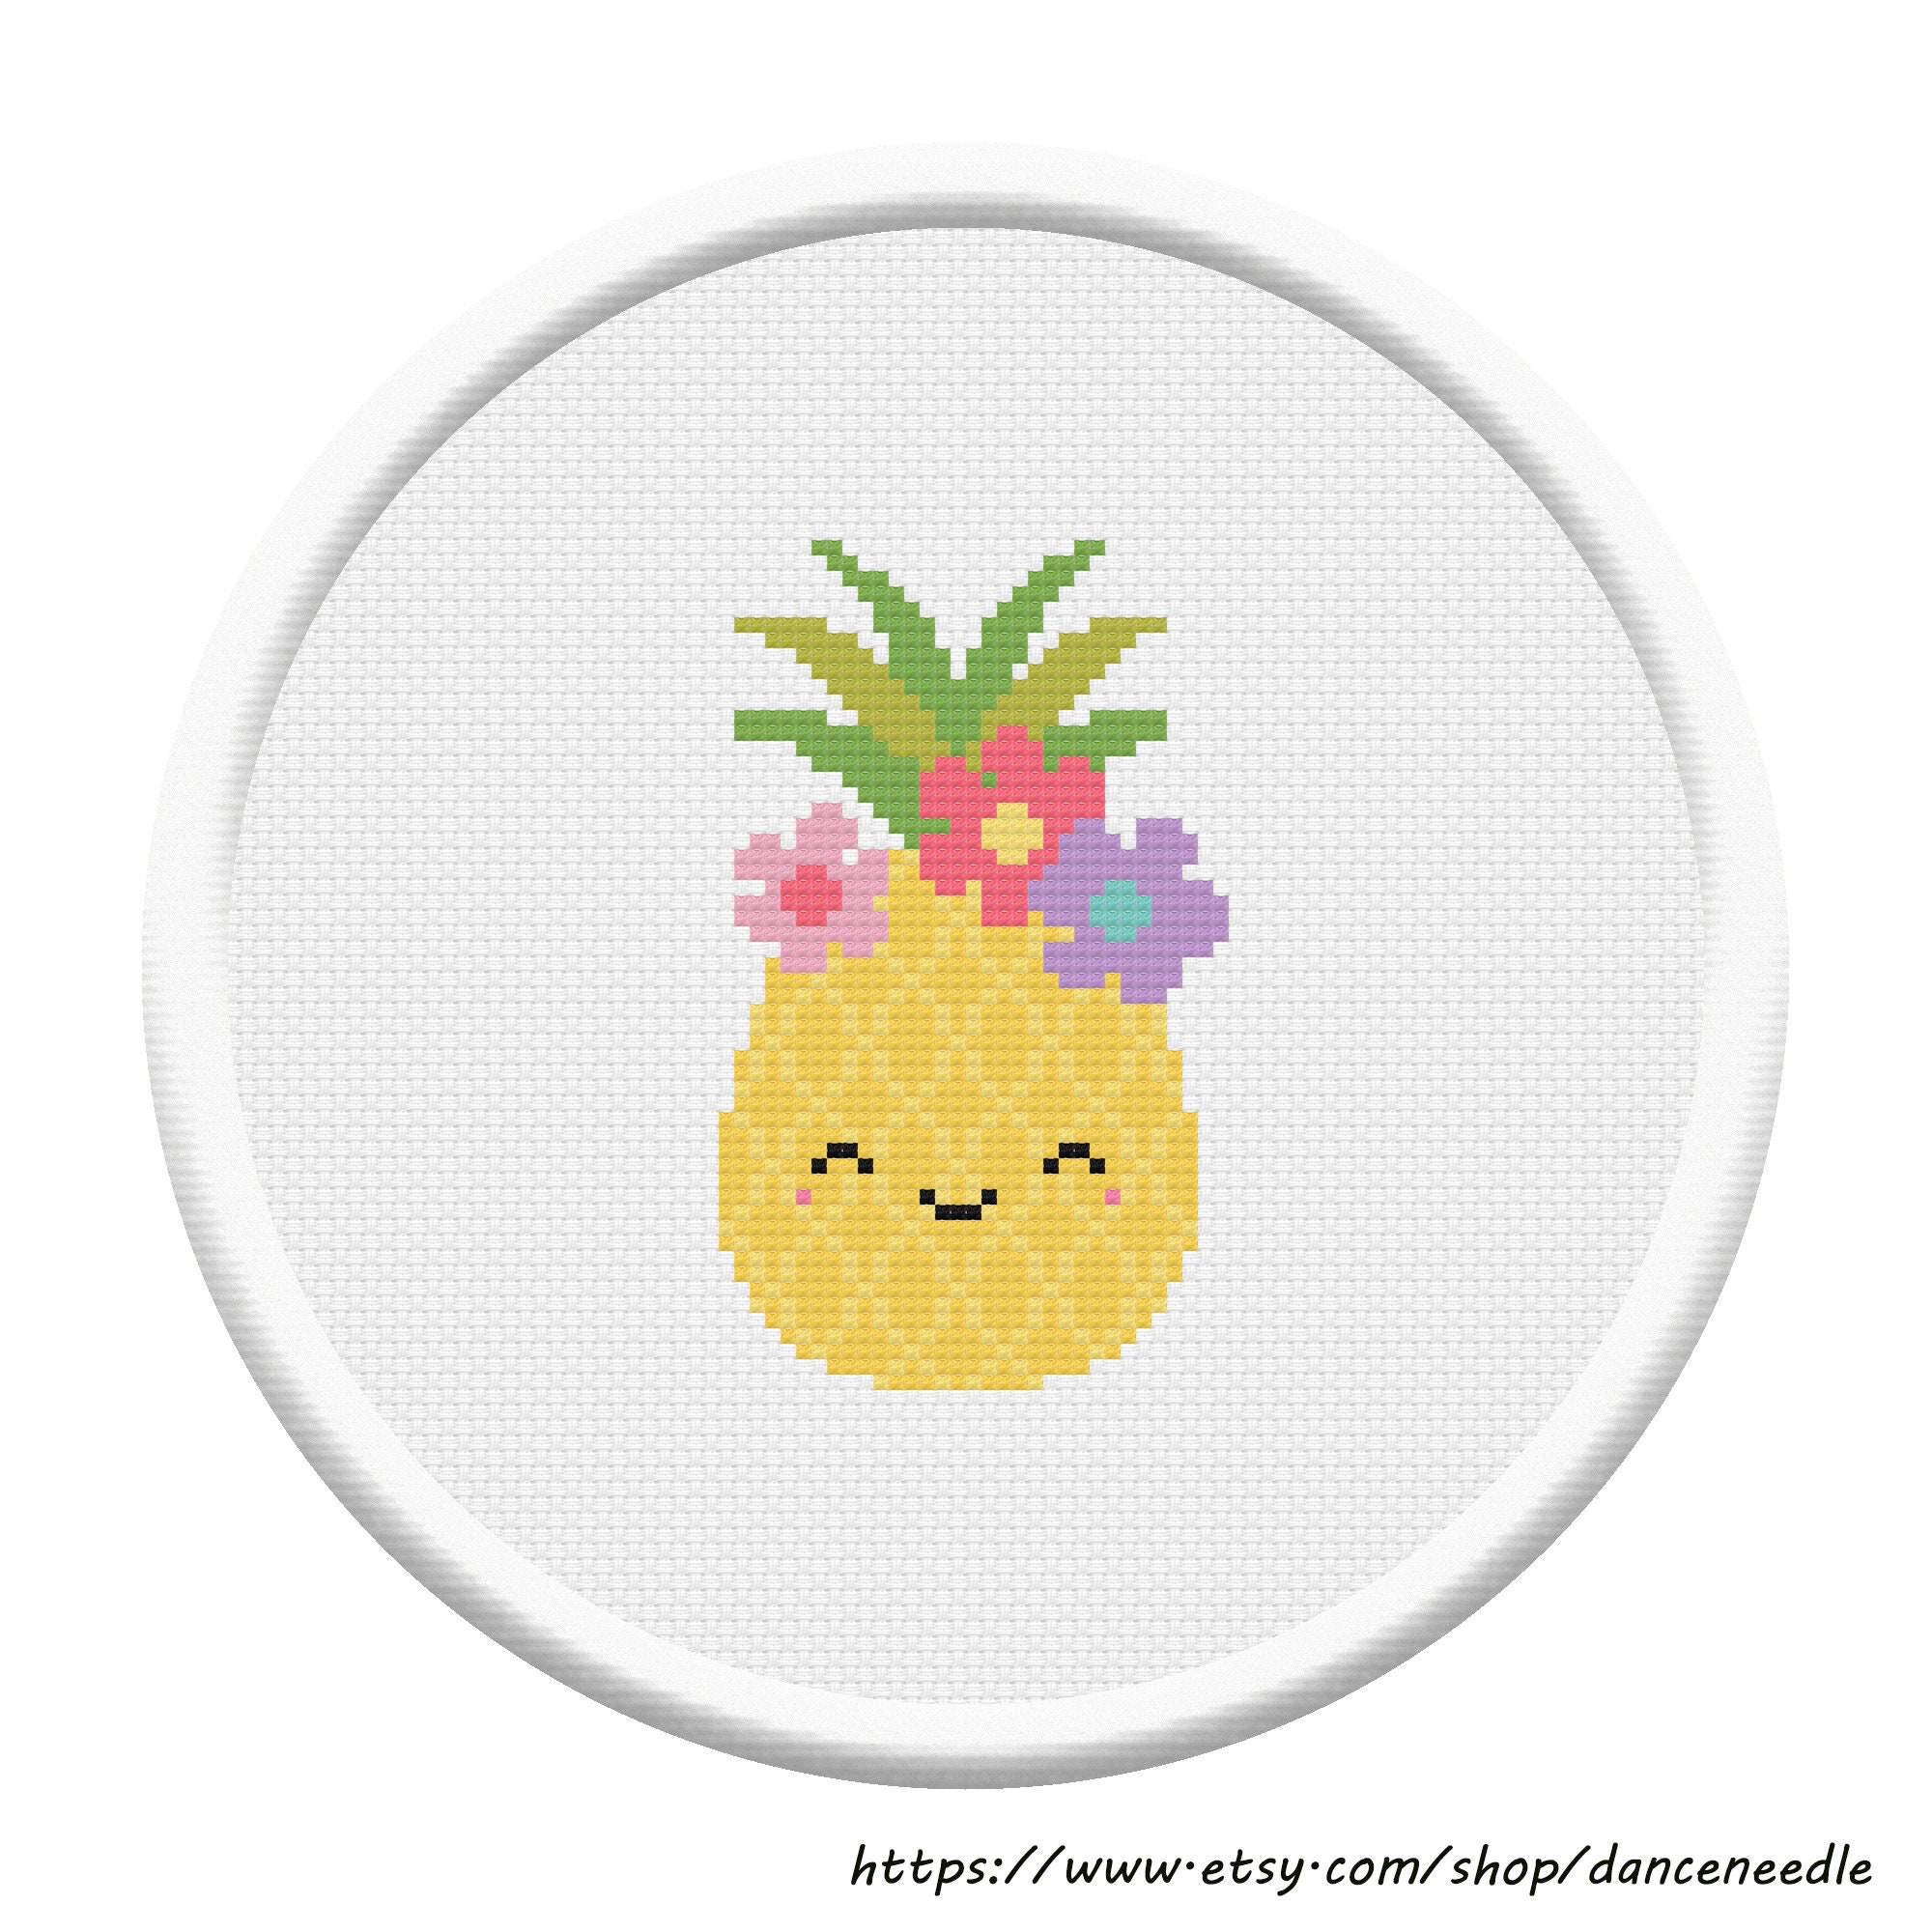 Pineapple Beadwork Pin DIY Kit, Embroidery Beading Brooch, Green